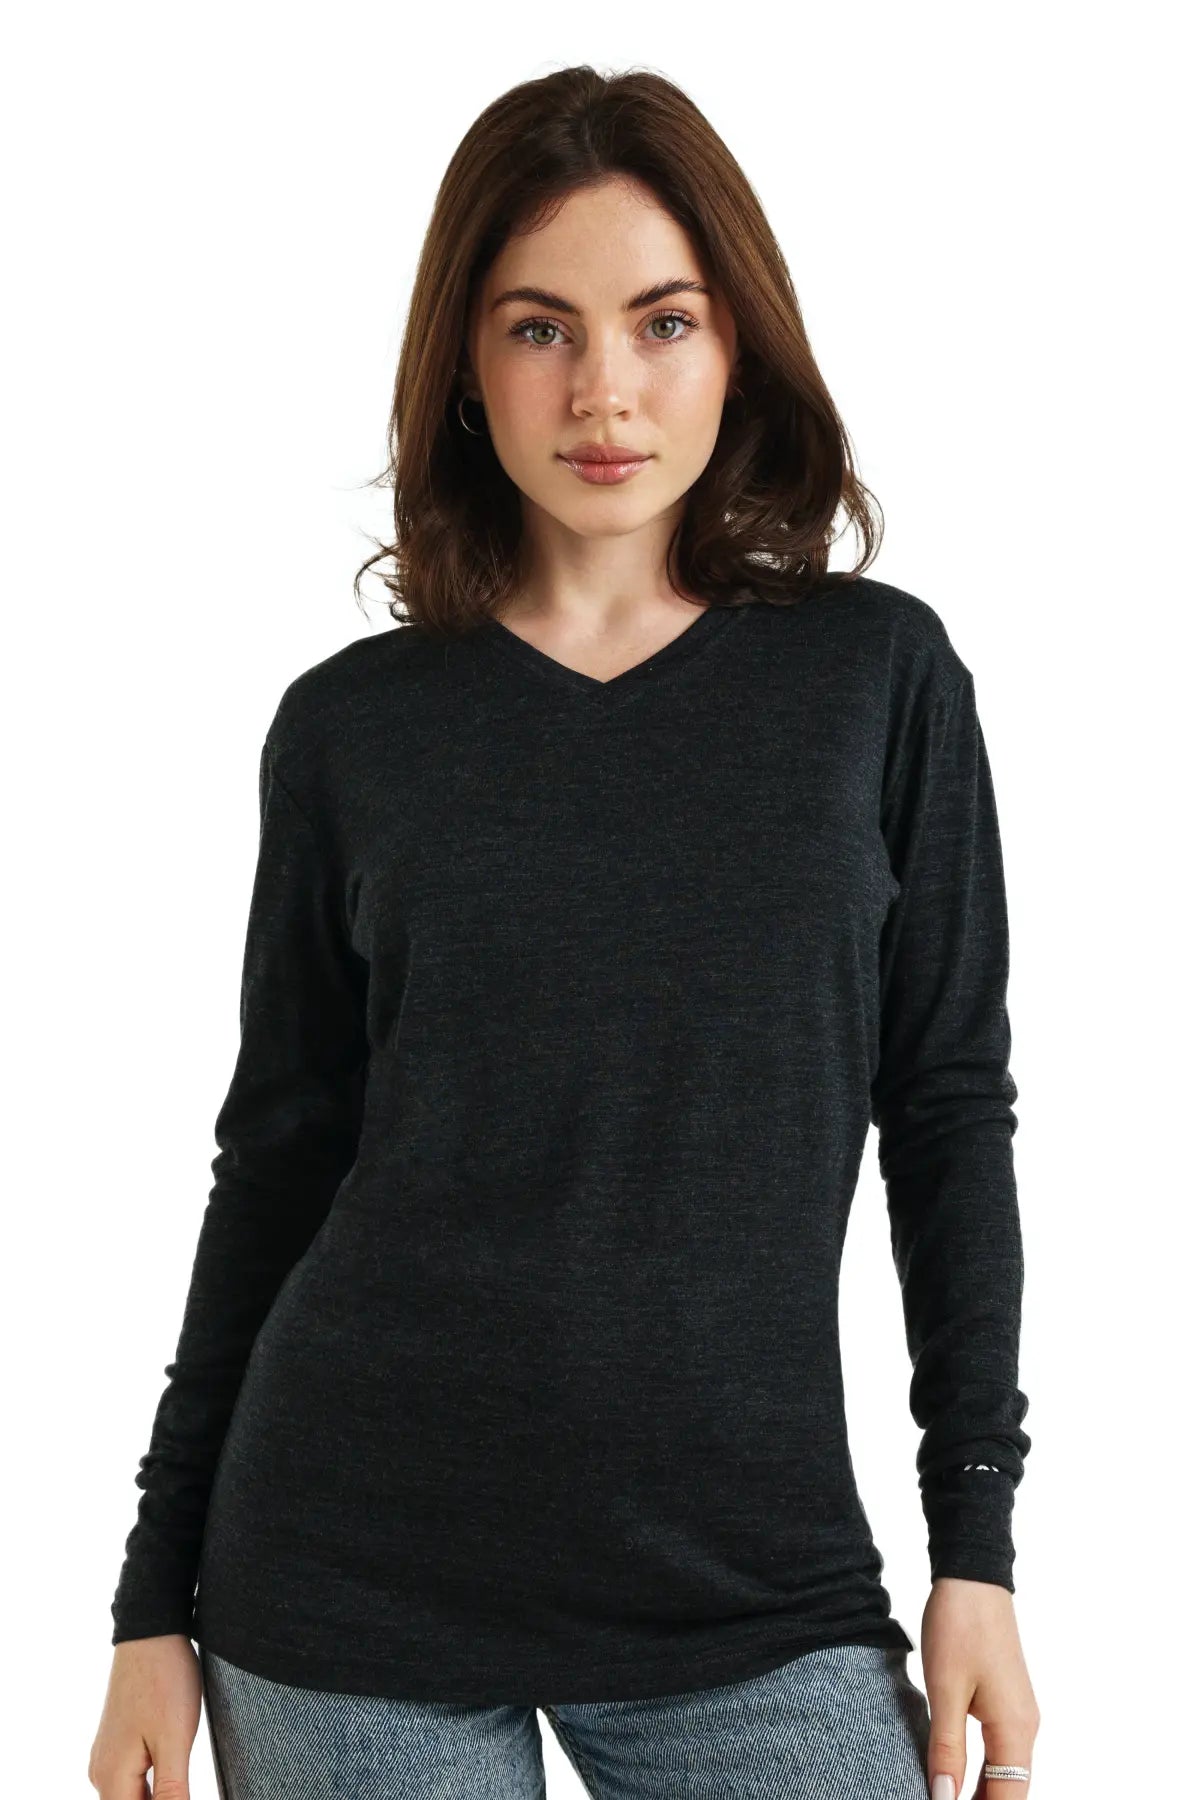 Merino Wool Long Sleeve (Charcoal V-neck) Thermal Base Layer Underwear -  Lightweight